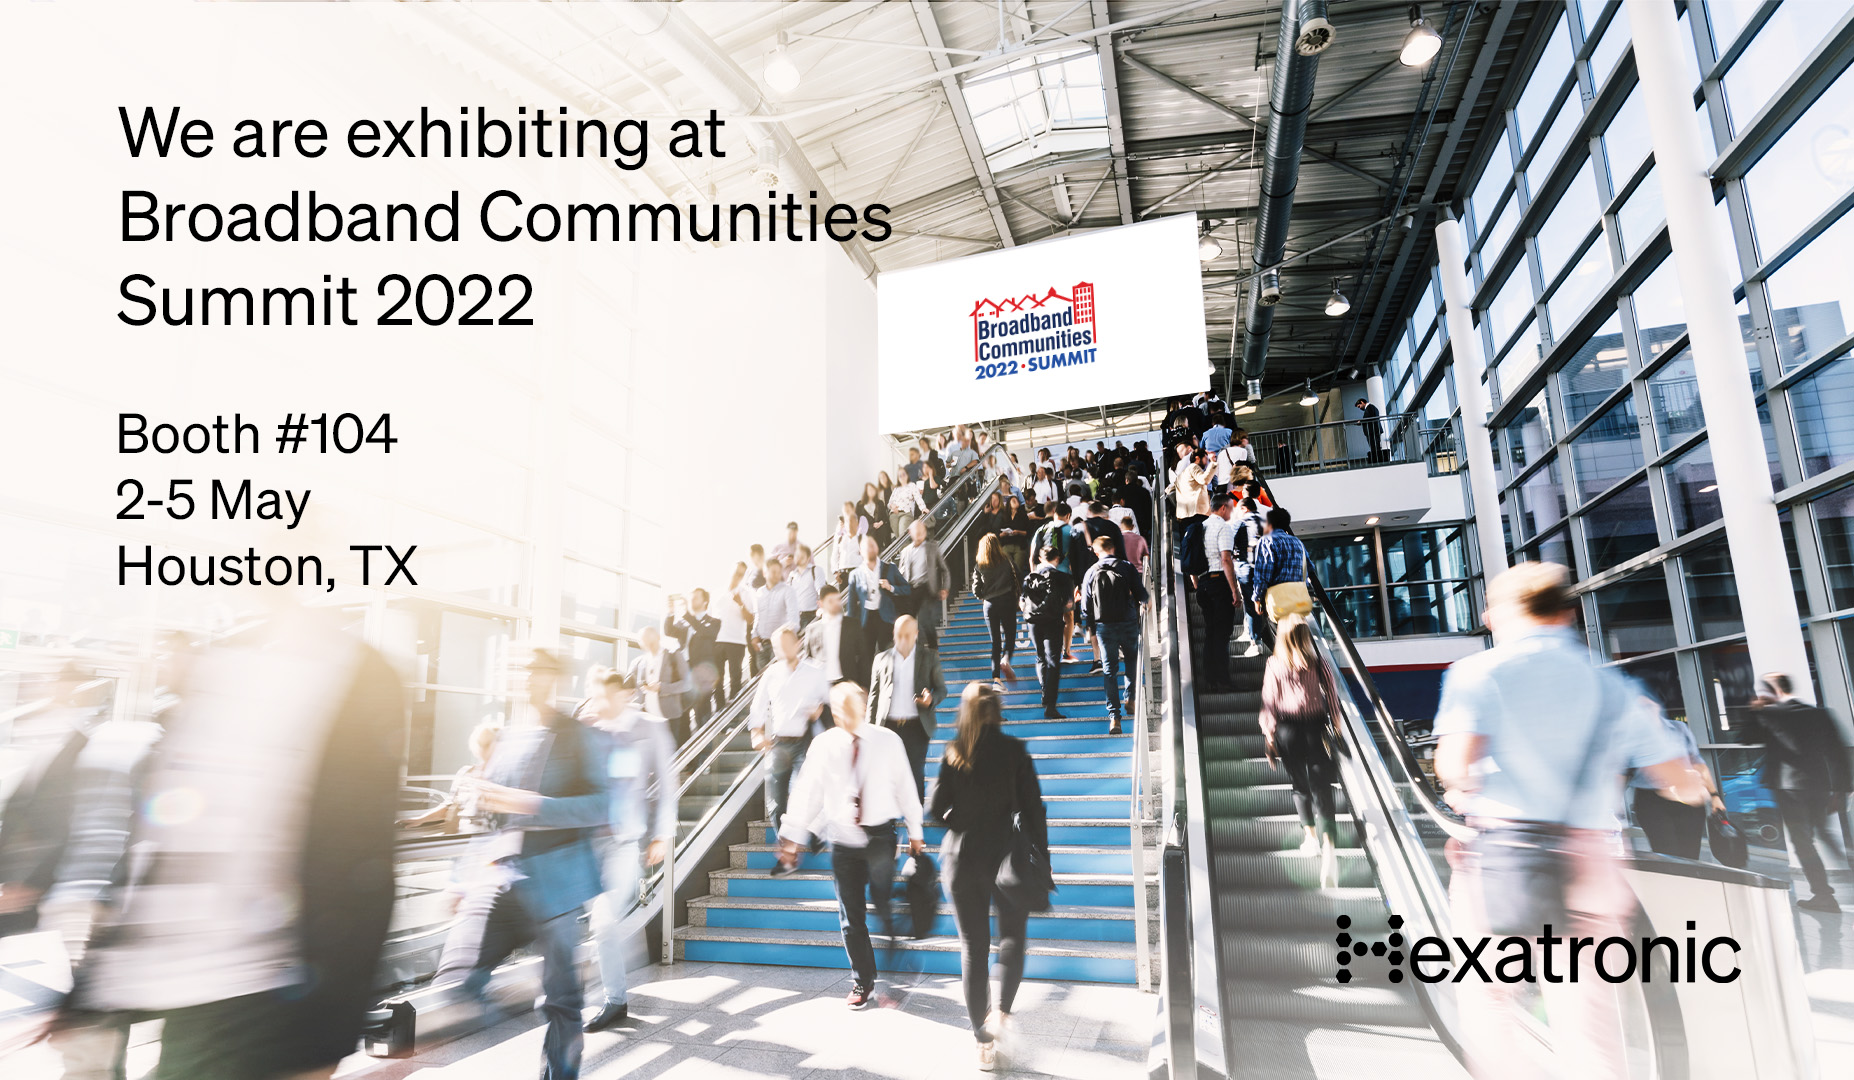 Hexatronic at Broadband Communities Summit 2022